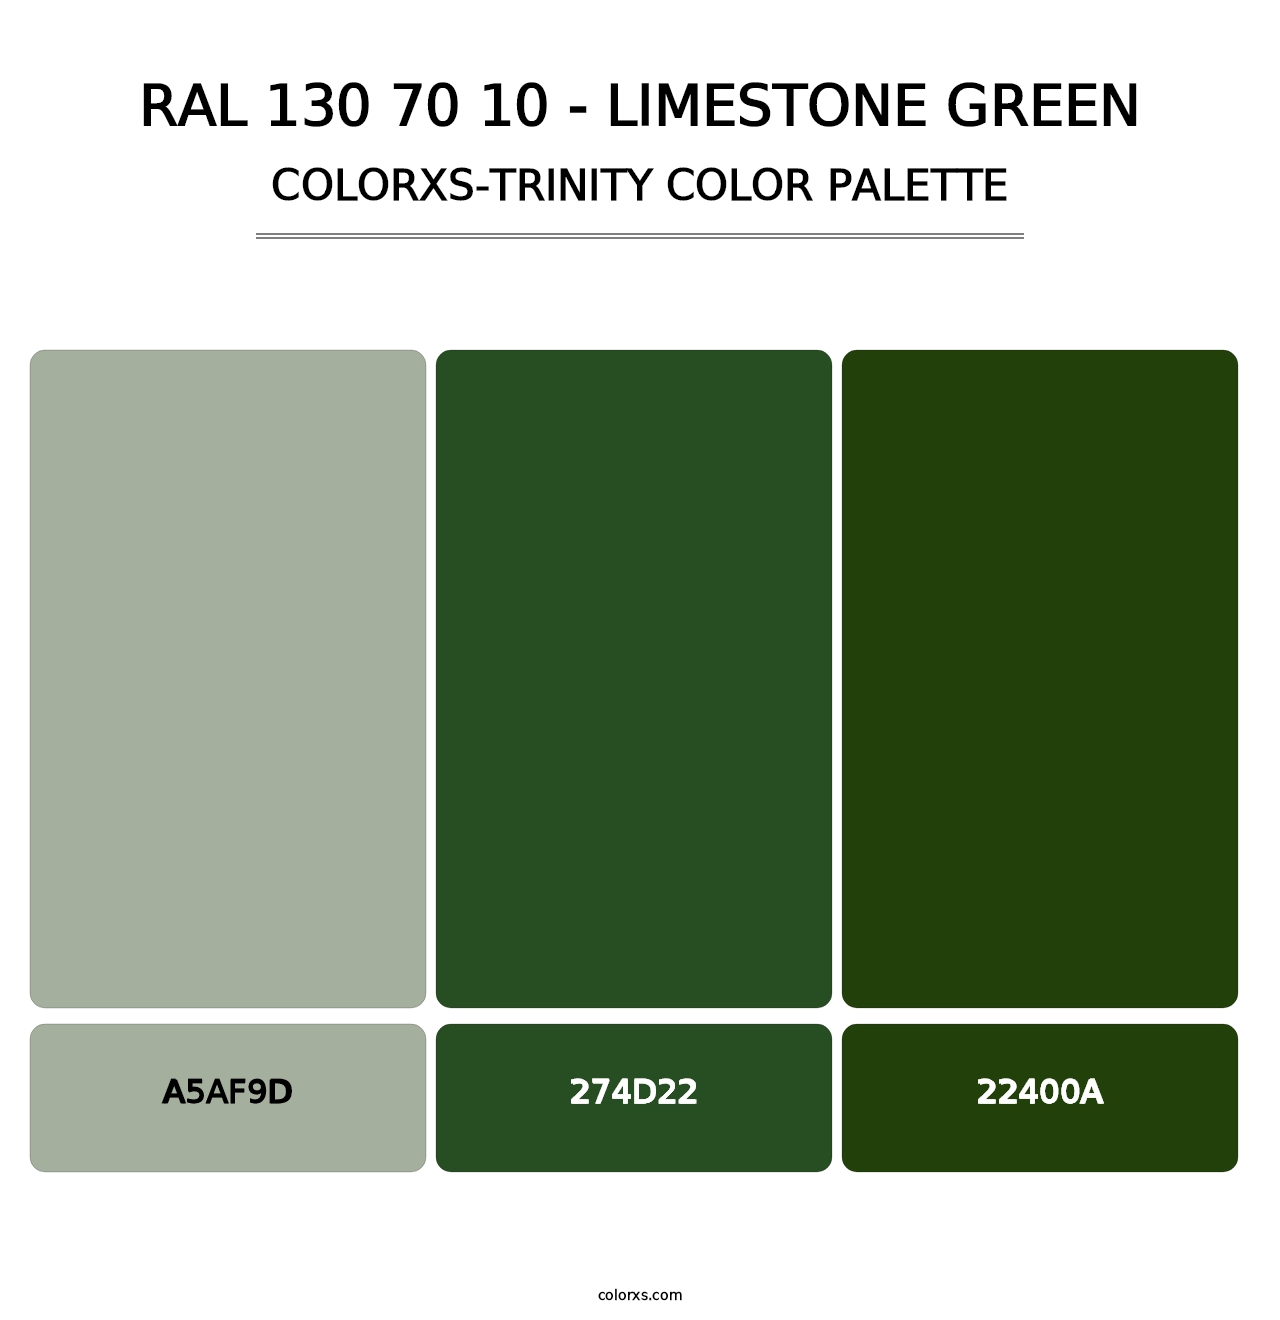 RAL 130 70 10 - Limestone Green - Colorxs Trinity Palette